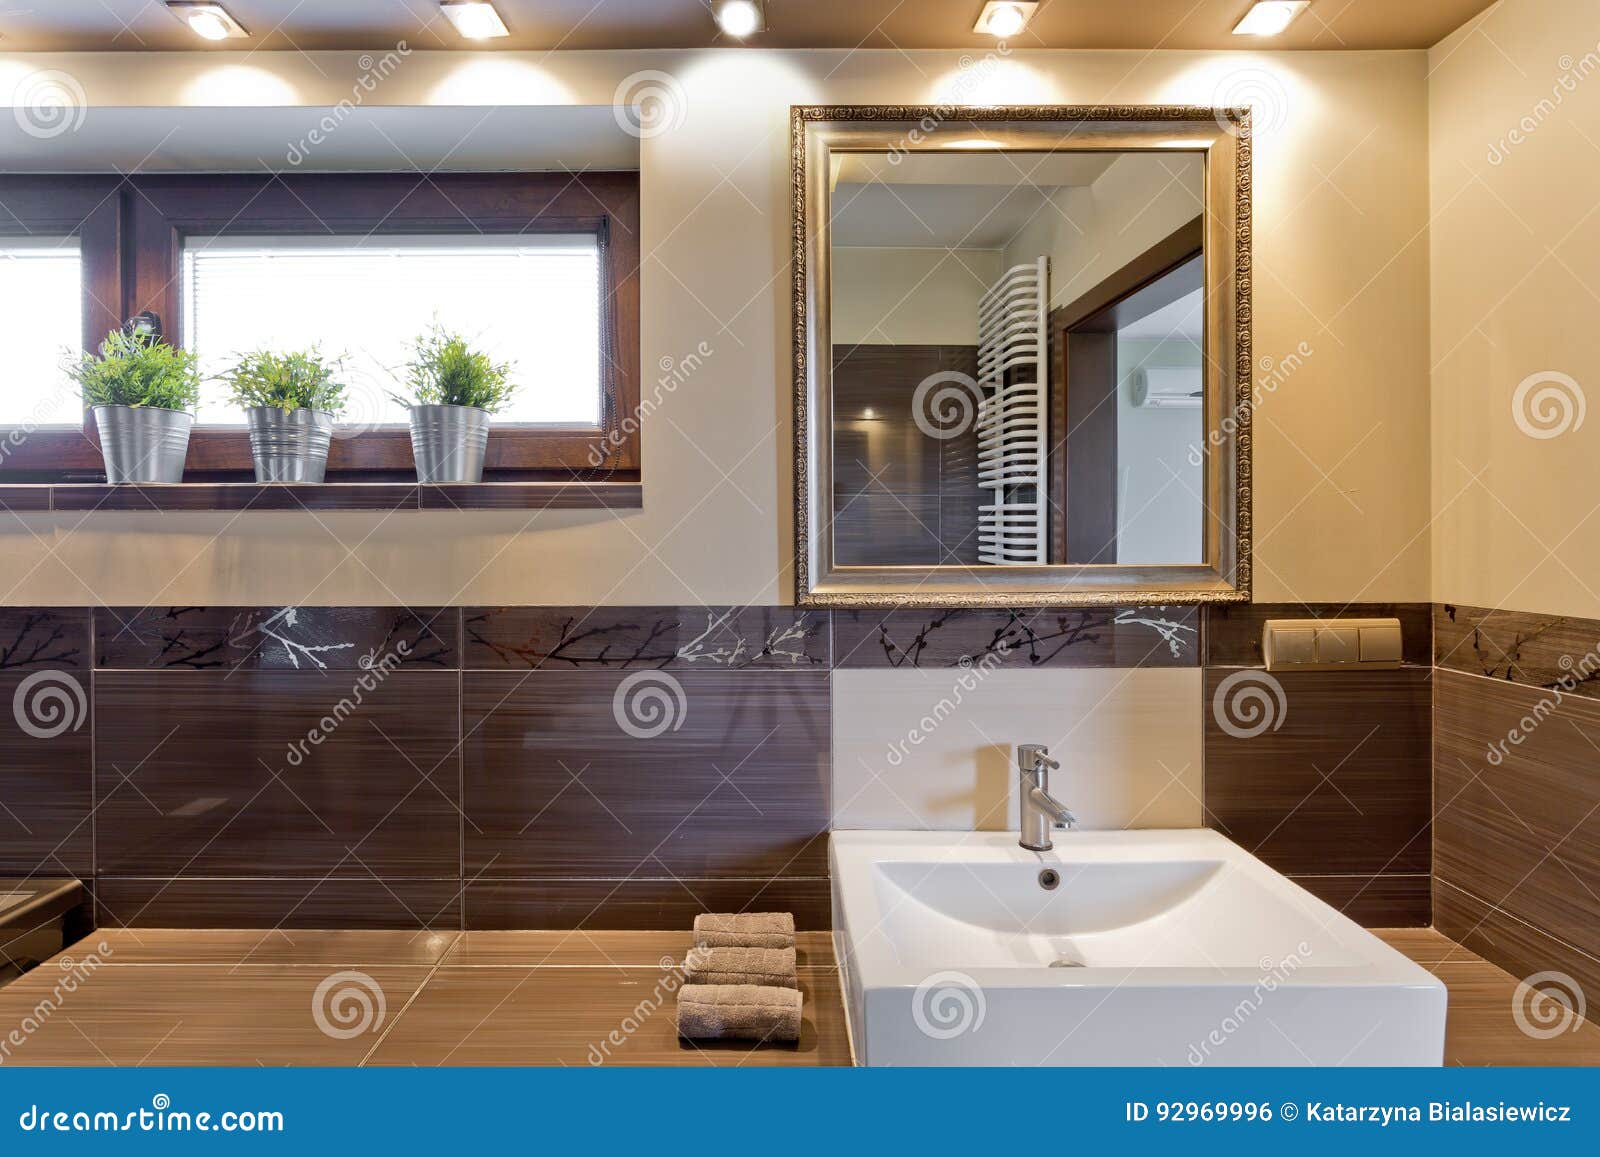 bathroom mirror above sink